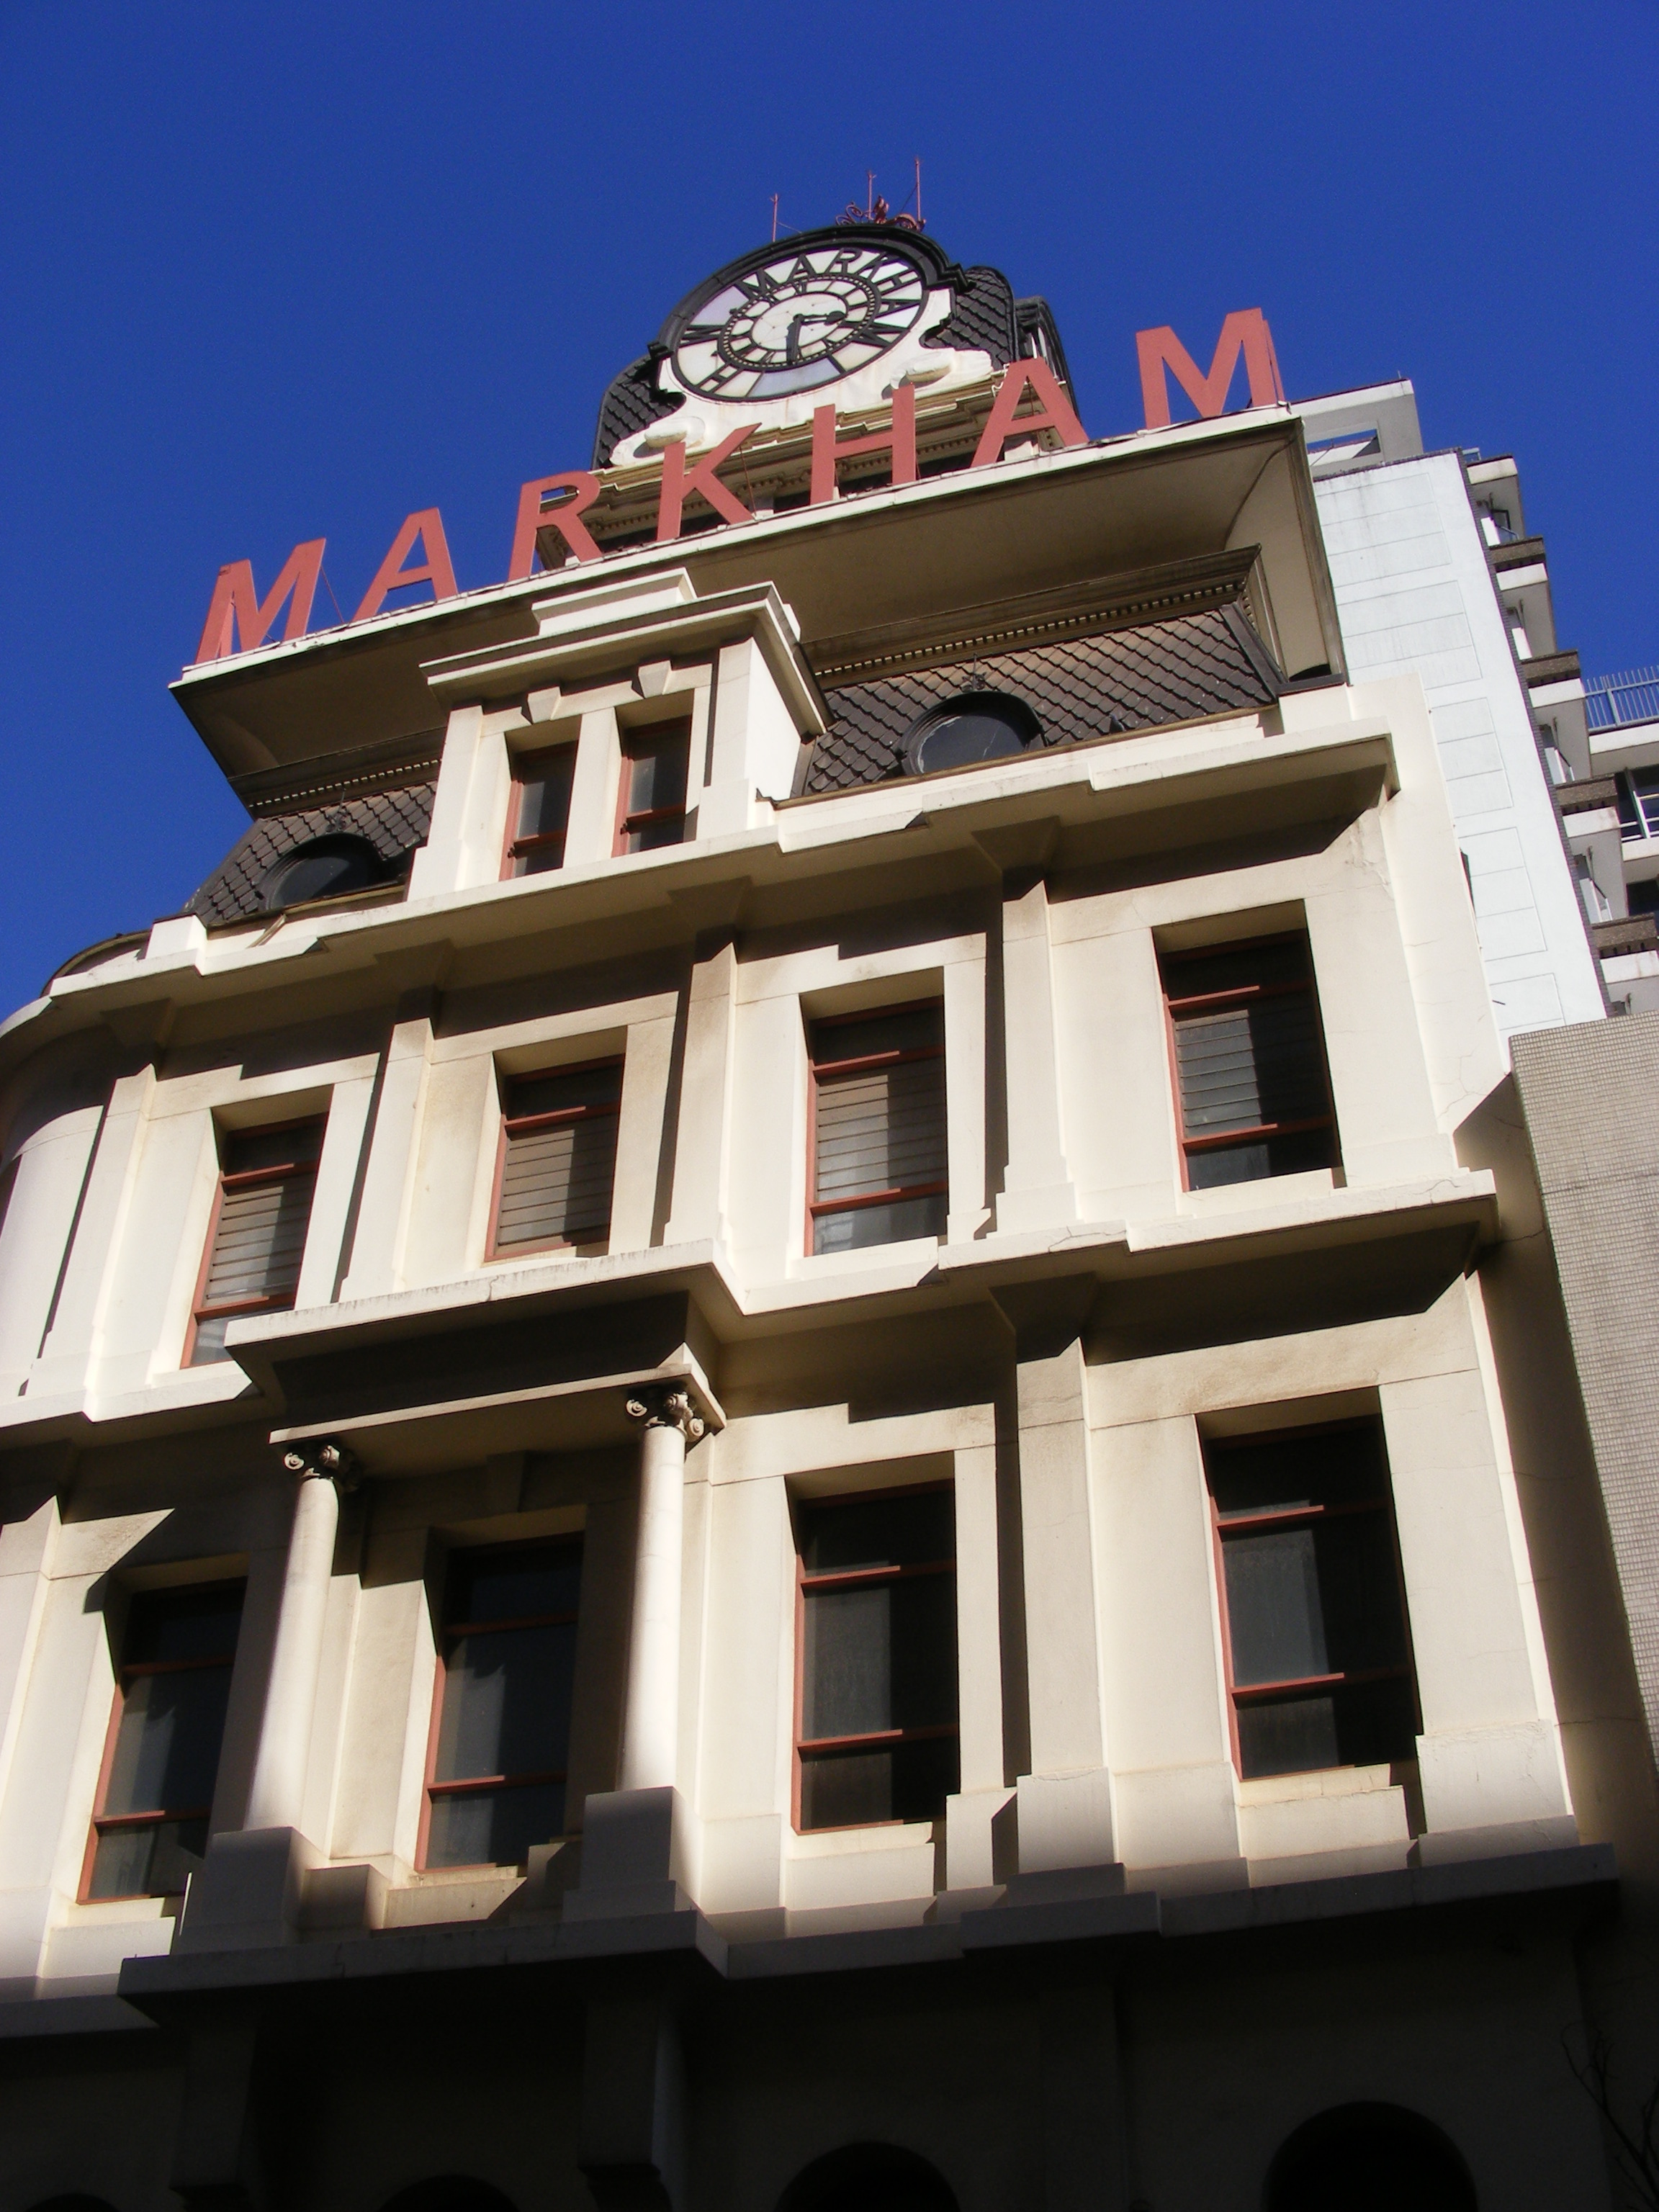 The Markham's Building